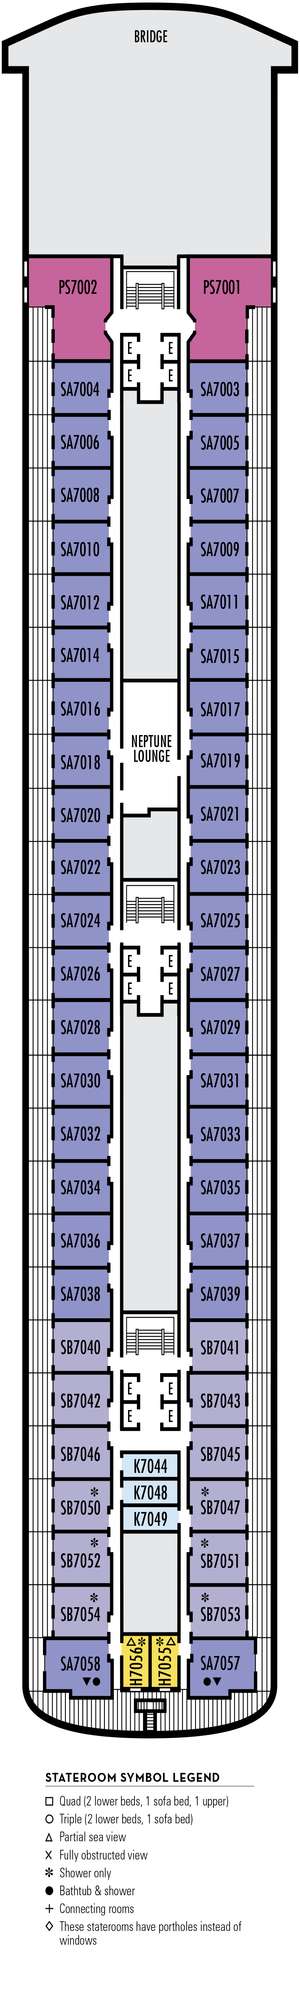 Deck plan for Amsterdam